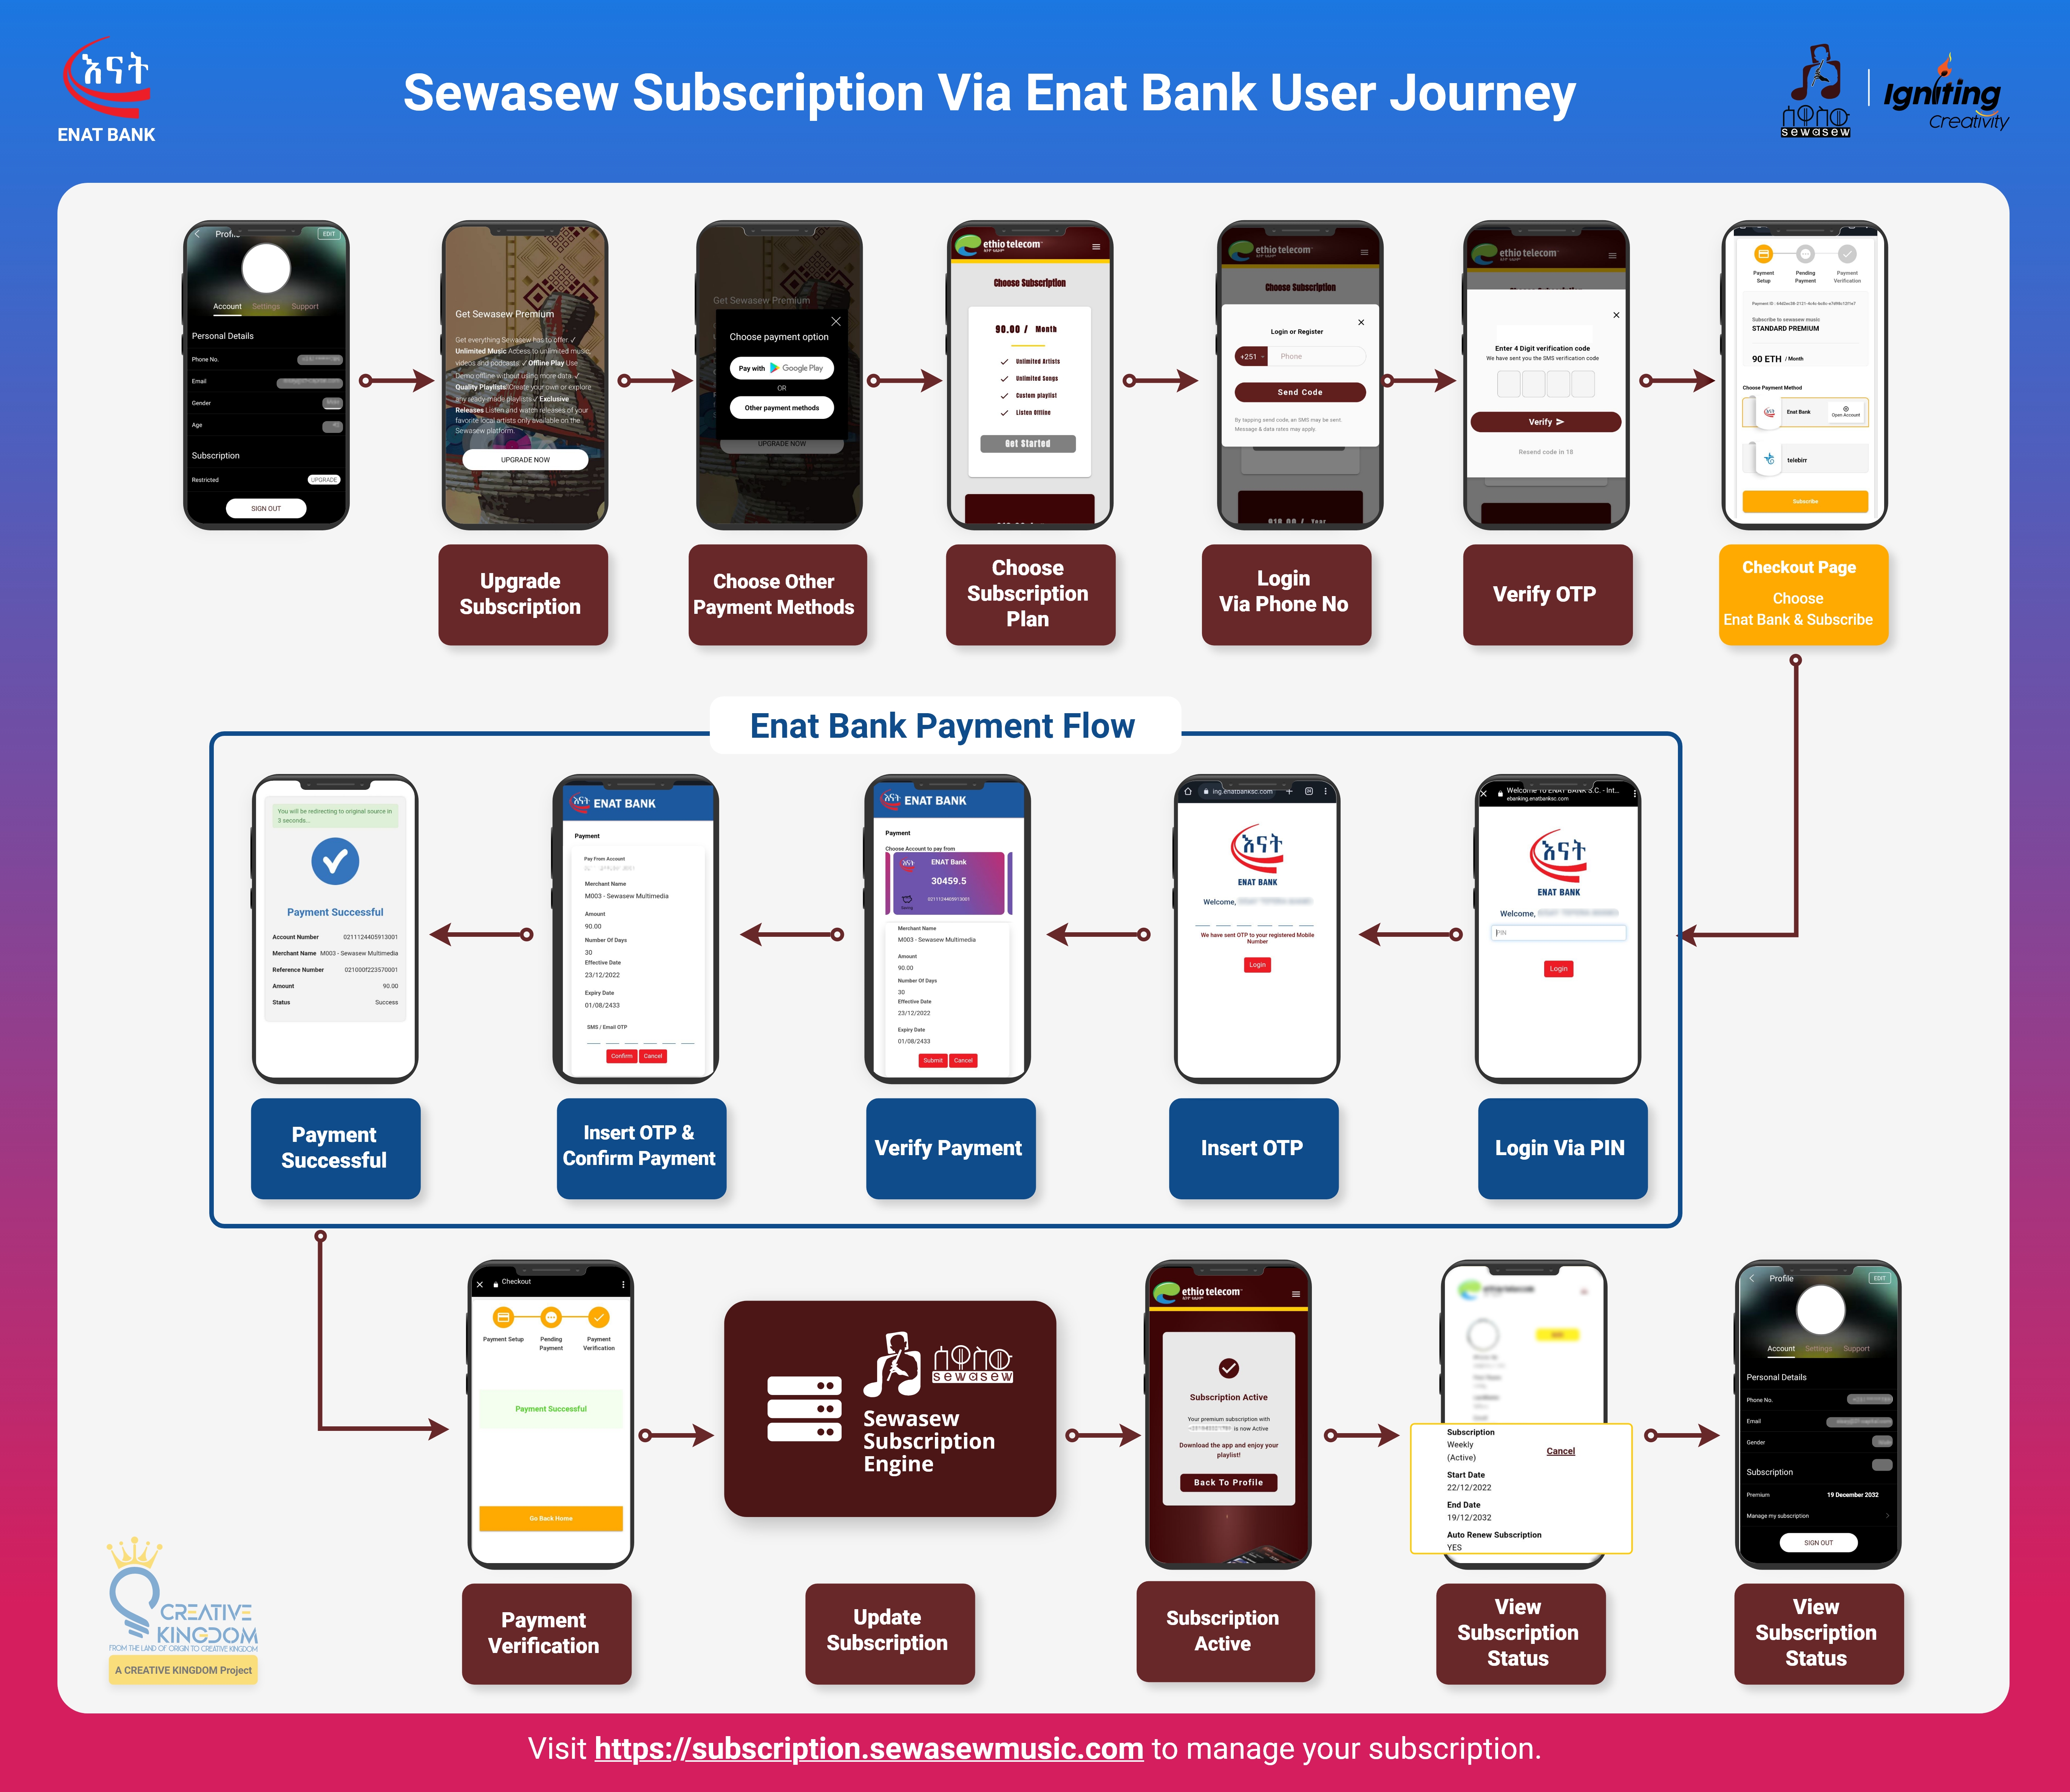 Sewasew-Subscription-Via-Enat-Bank-User-Journey